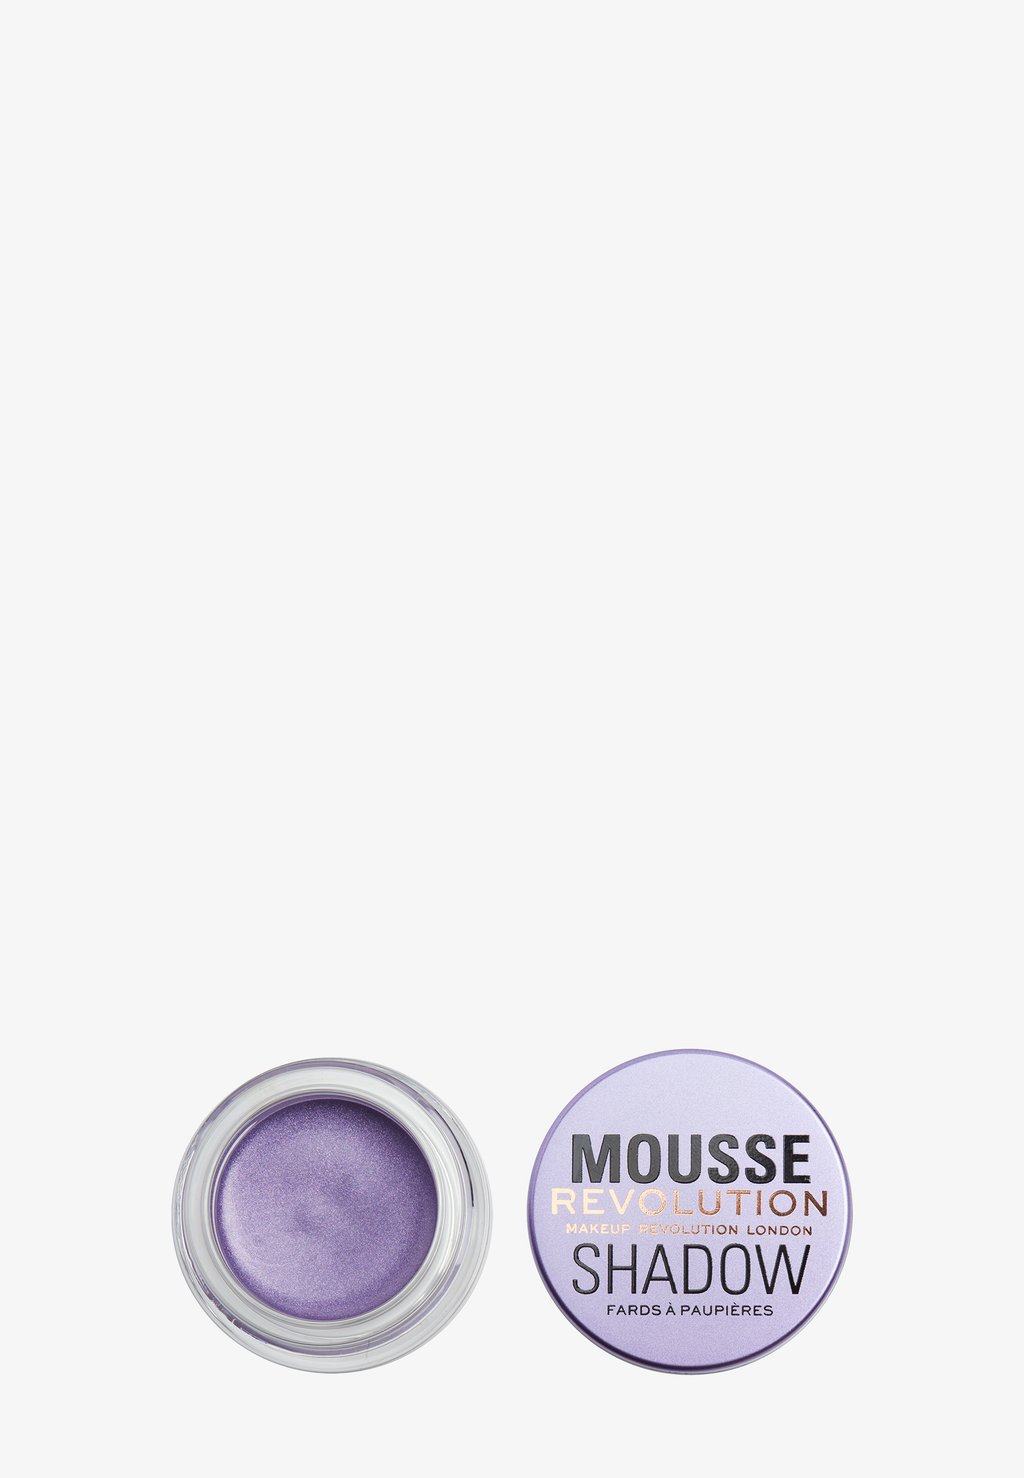 Тени для век Revolution Mousse Shadow Makeup Revolution, цвет lilac кремовые тени для глаз makeup revolution mousse shadow 4 г